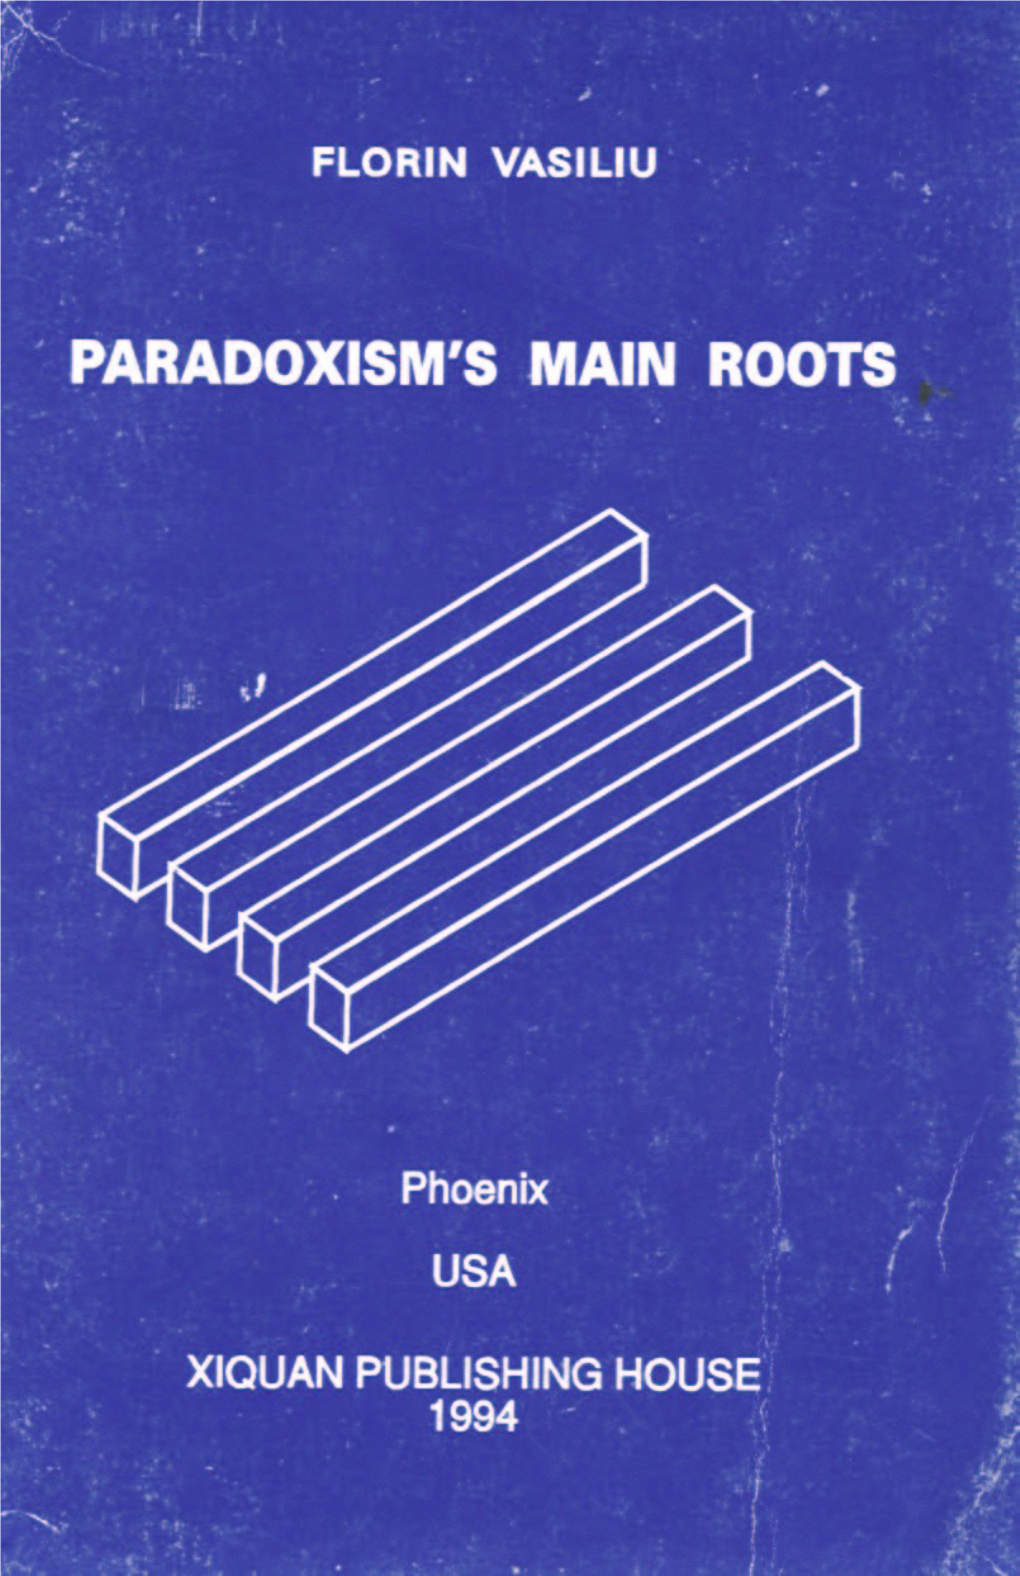 Paradoxism's Main Roots, by F.Vasiliu